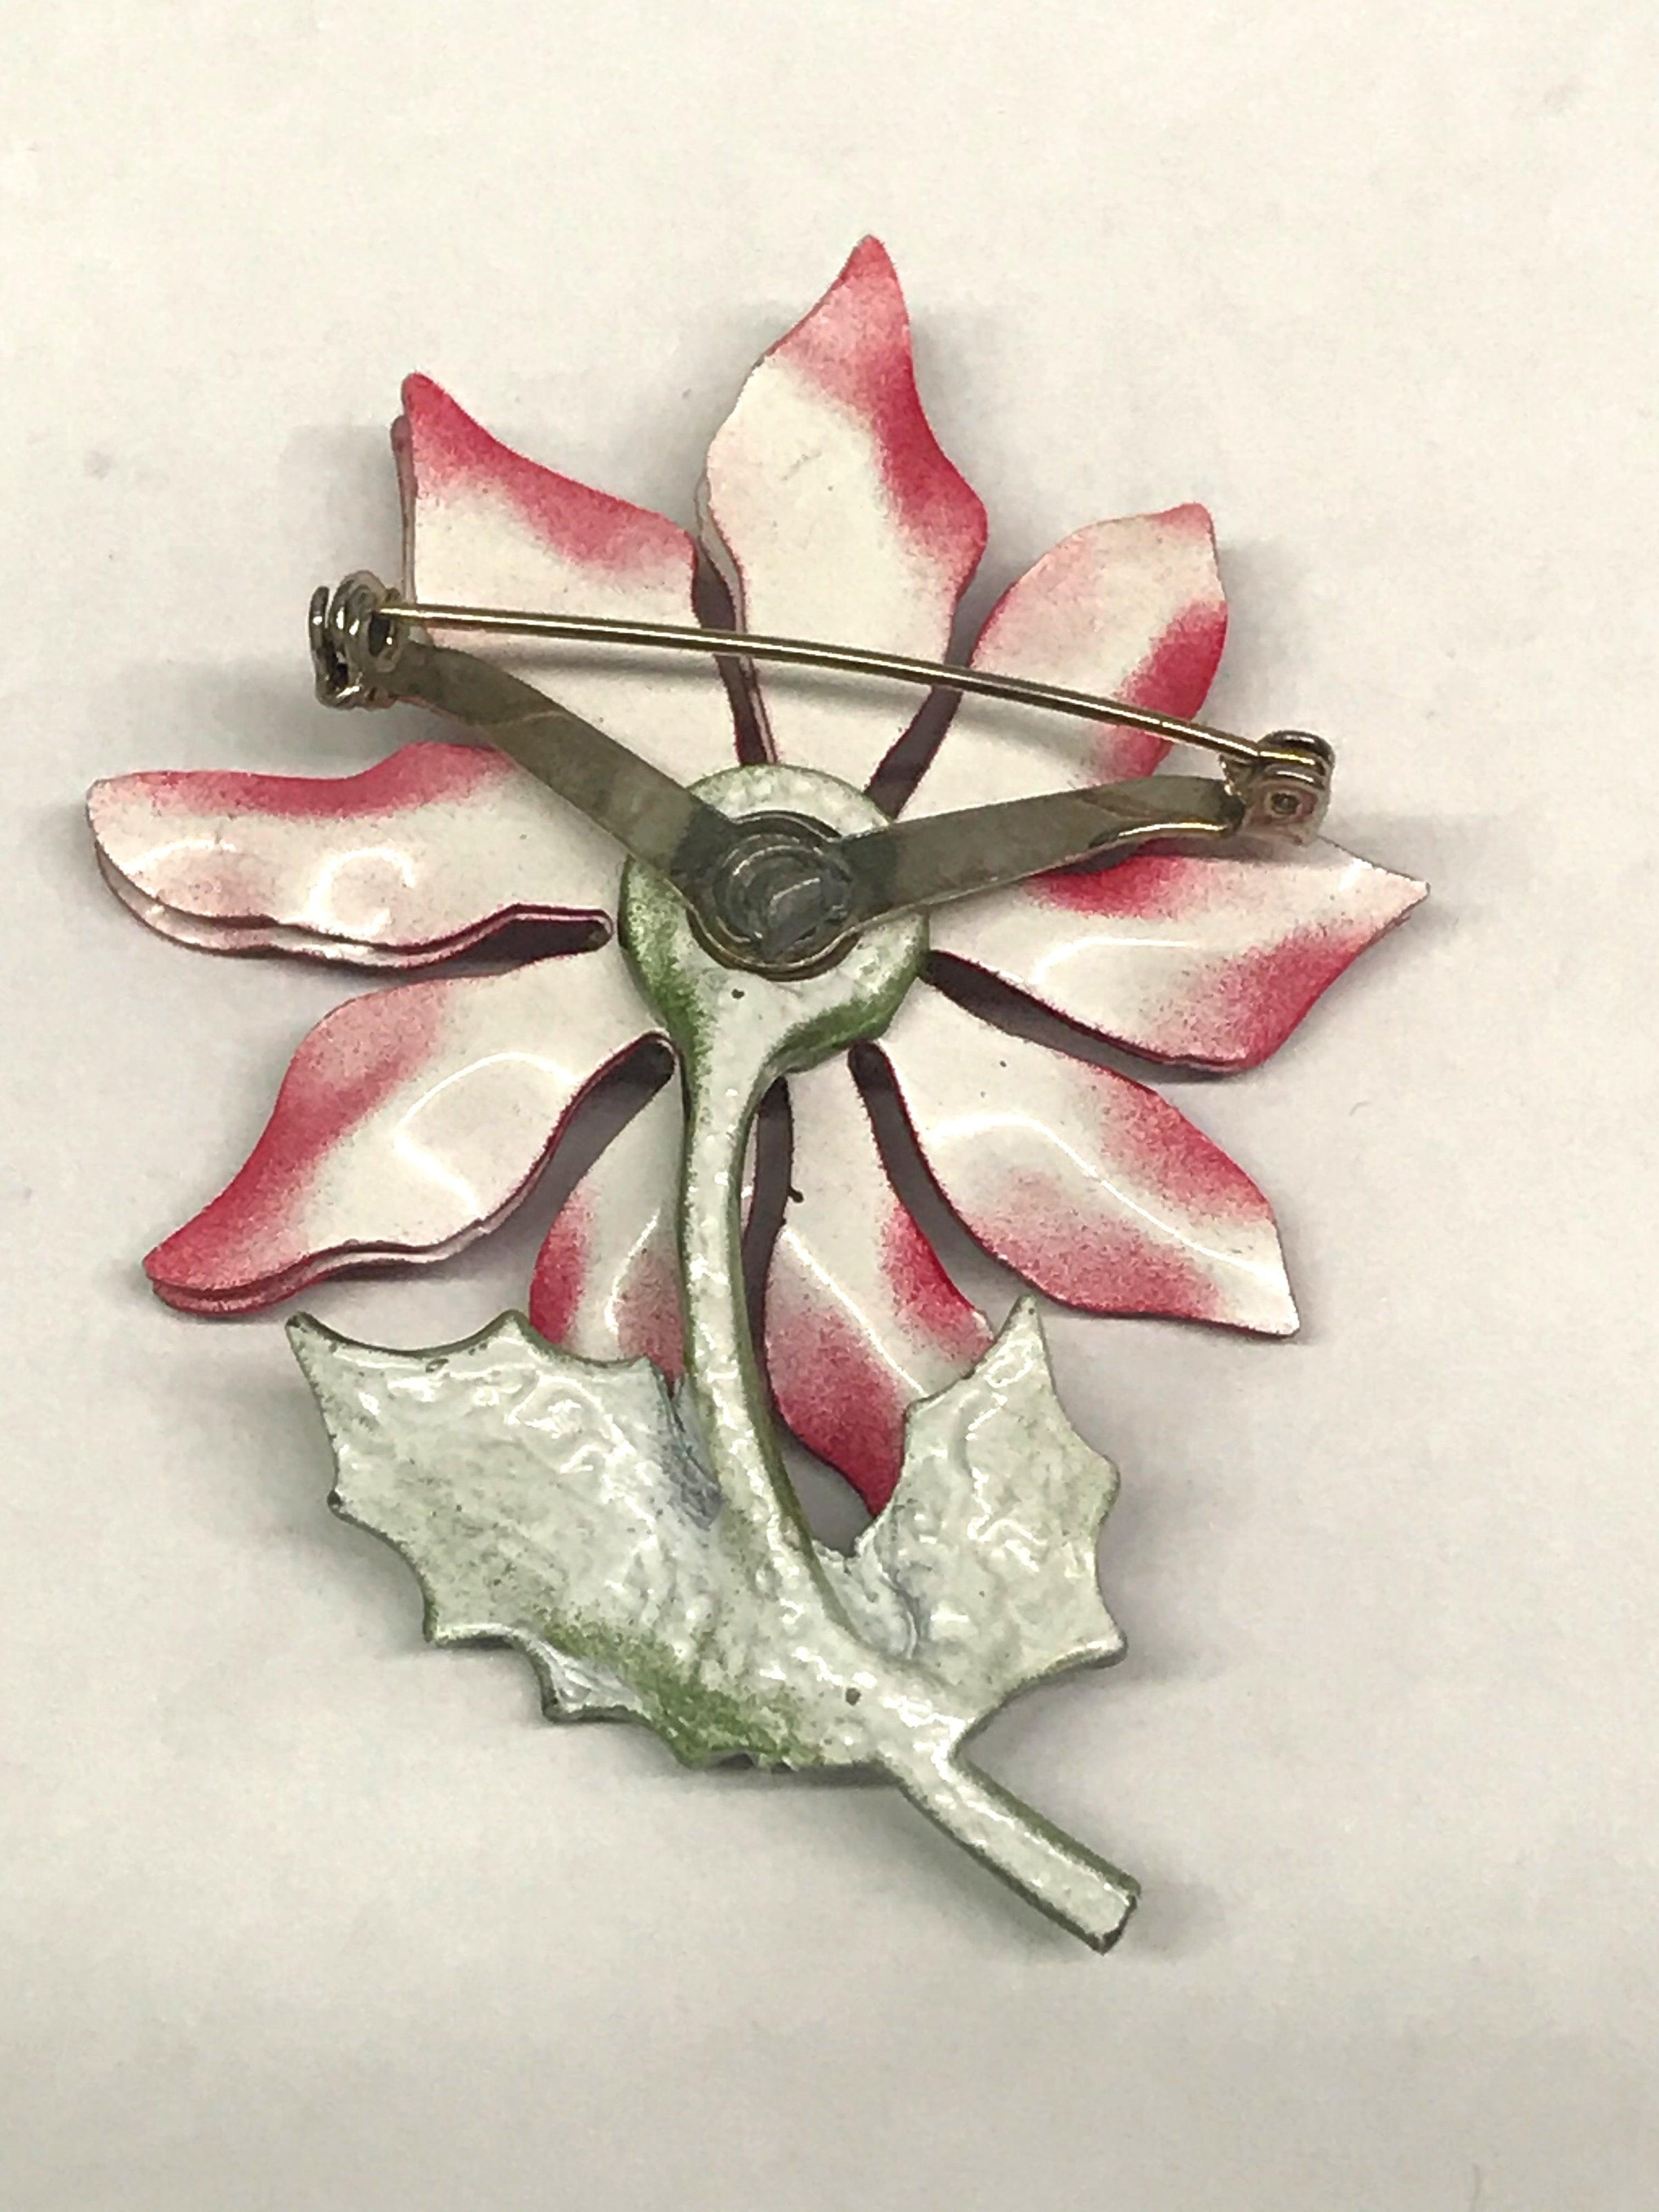 Vintage Enameled Metal Poinsettia Brooch Pin and Earrings Set - Hers and His Treasures